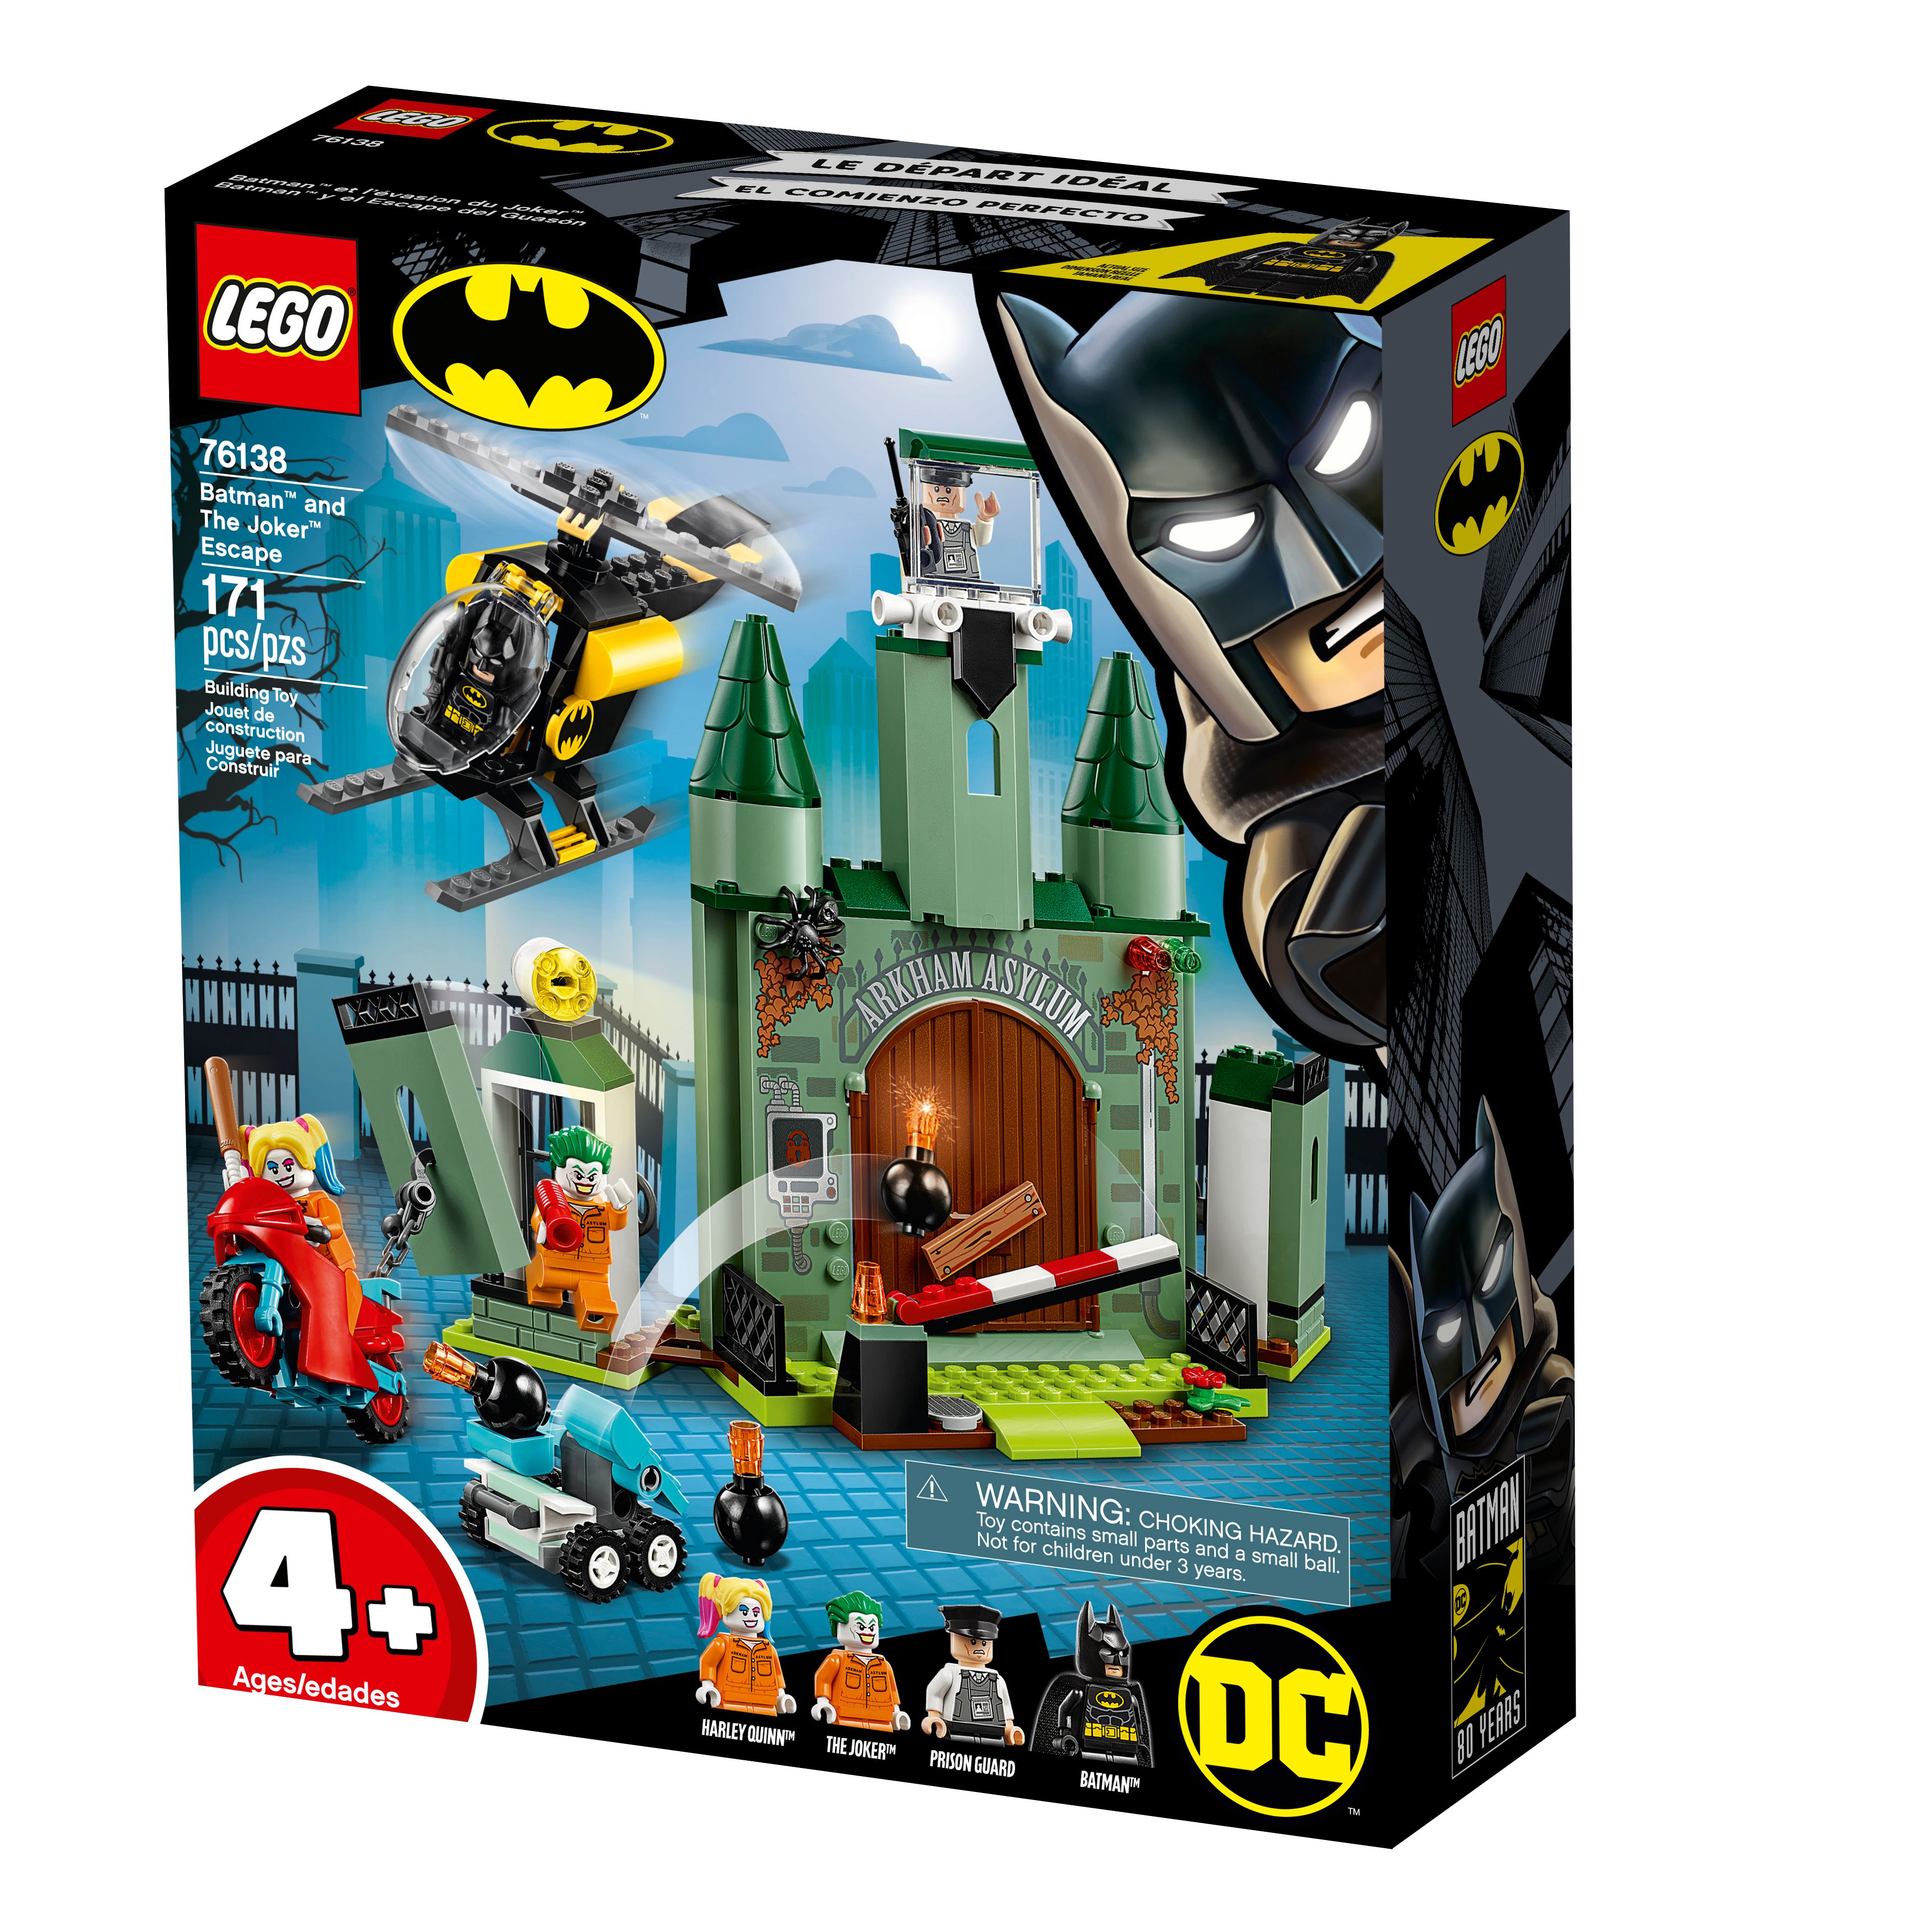 batman lego box